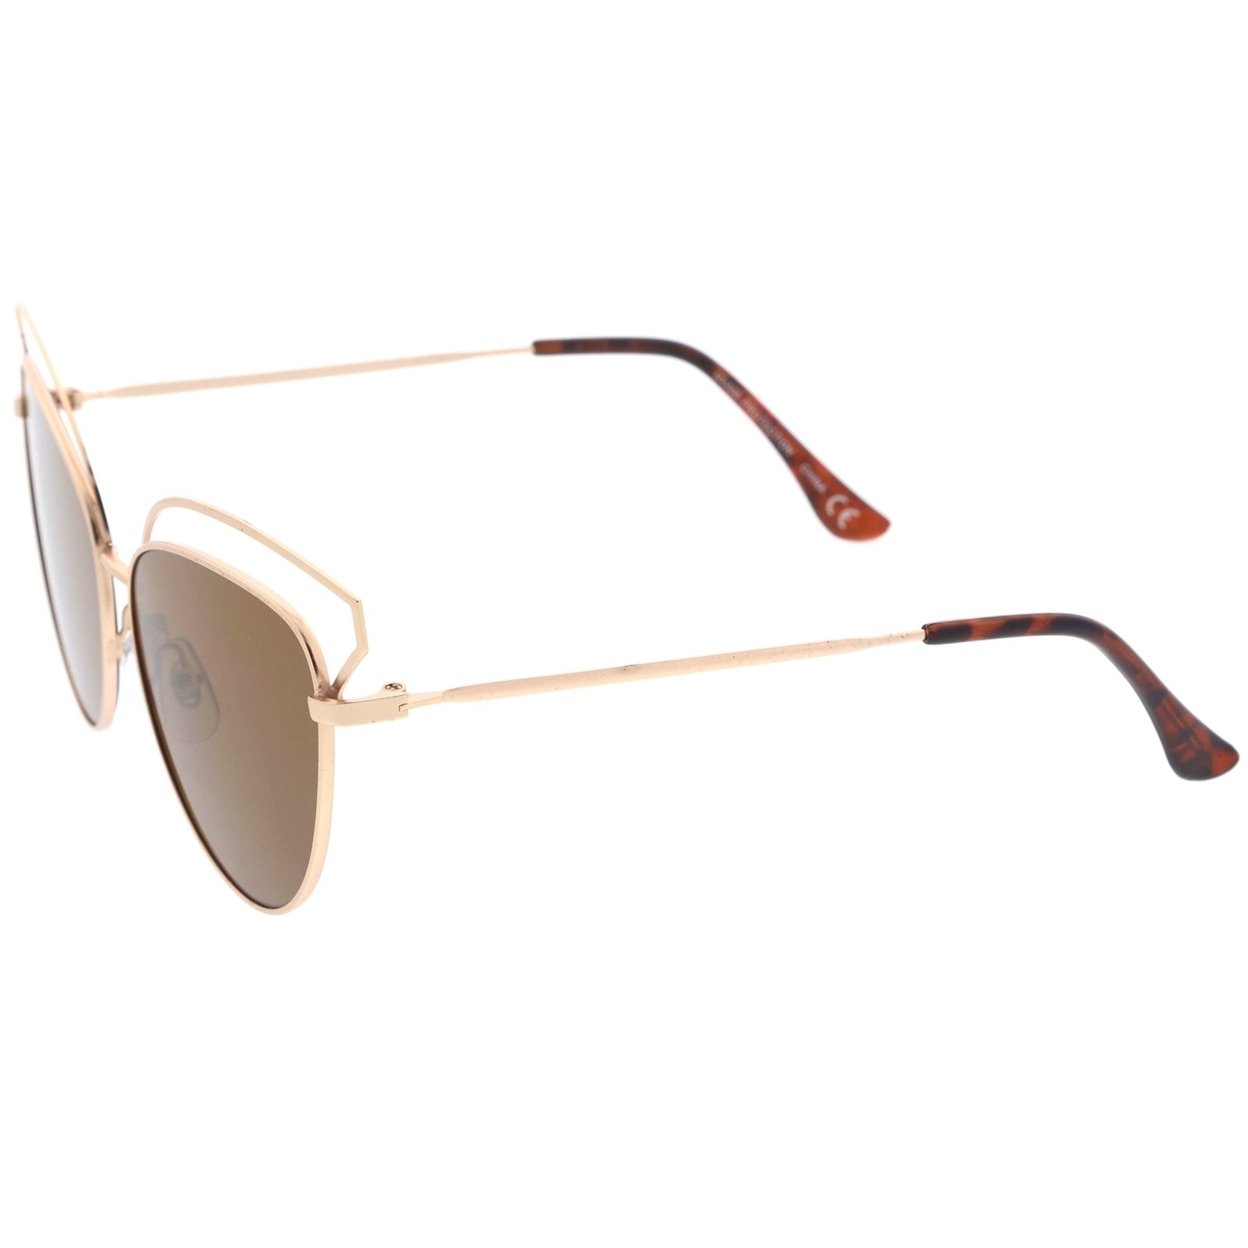 Women's Open Metal Frame Slim Temple Oversize Cat Eye Sunglasses 58mm - Gold / Amber